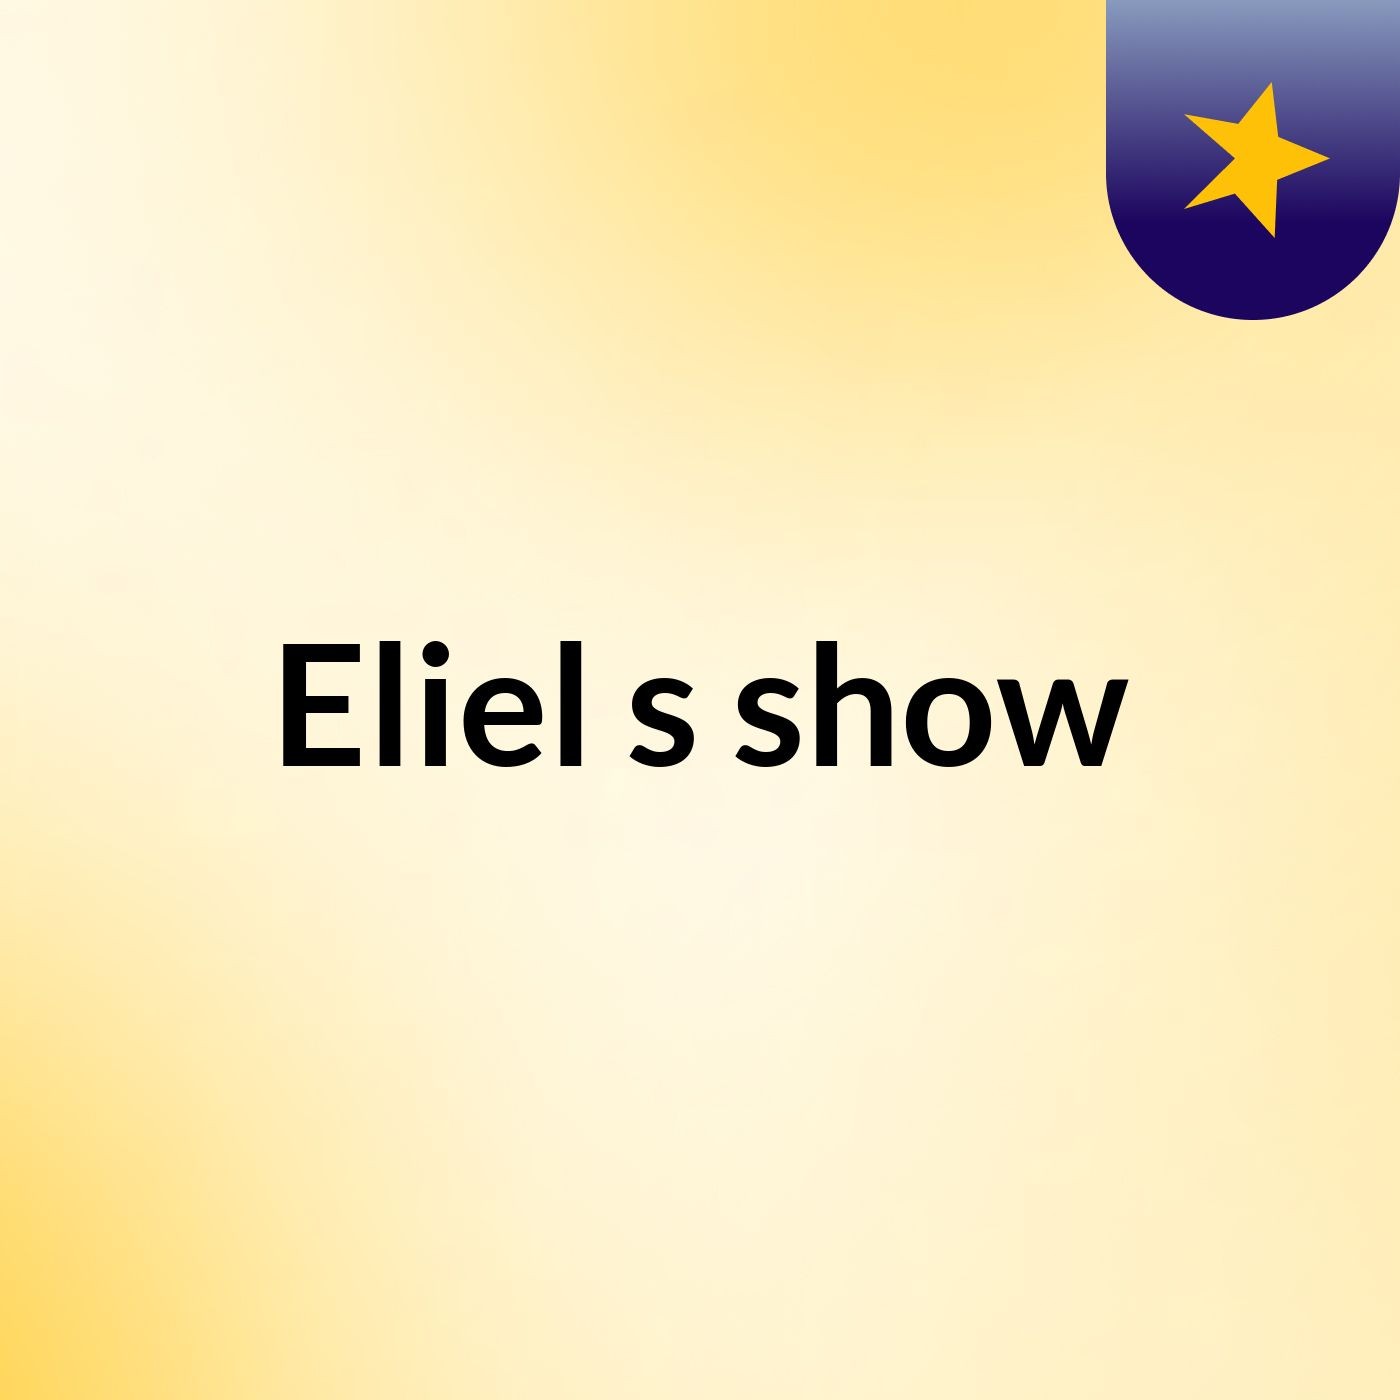 Eliel's show